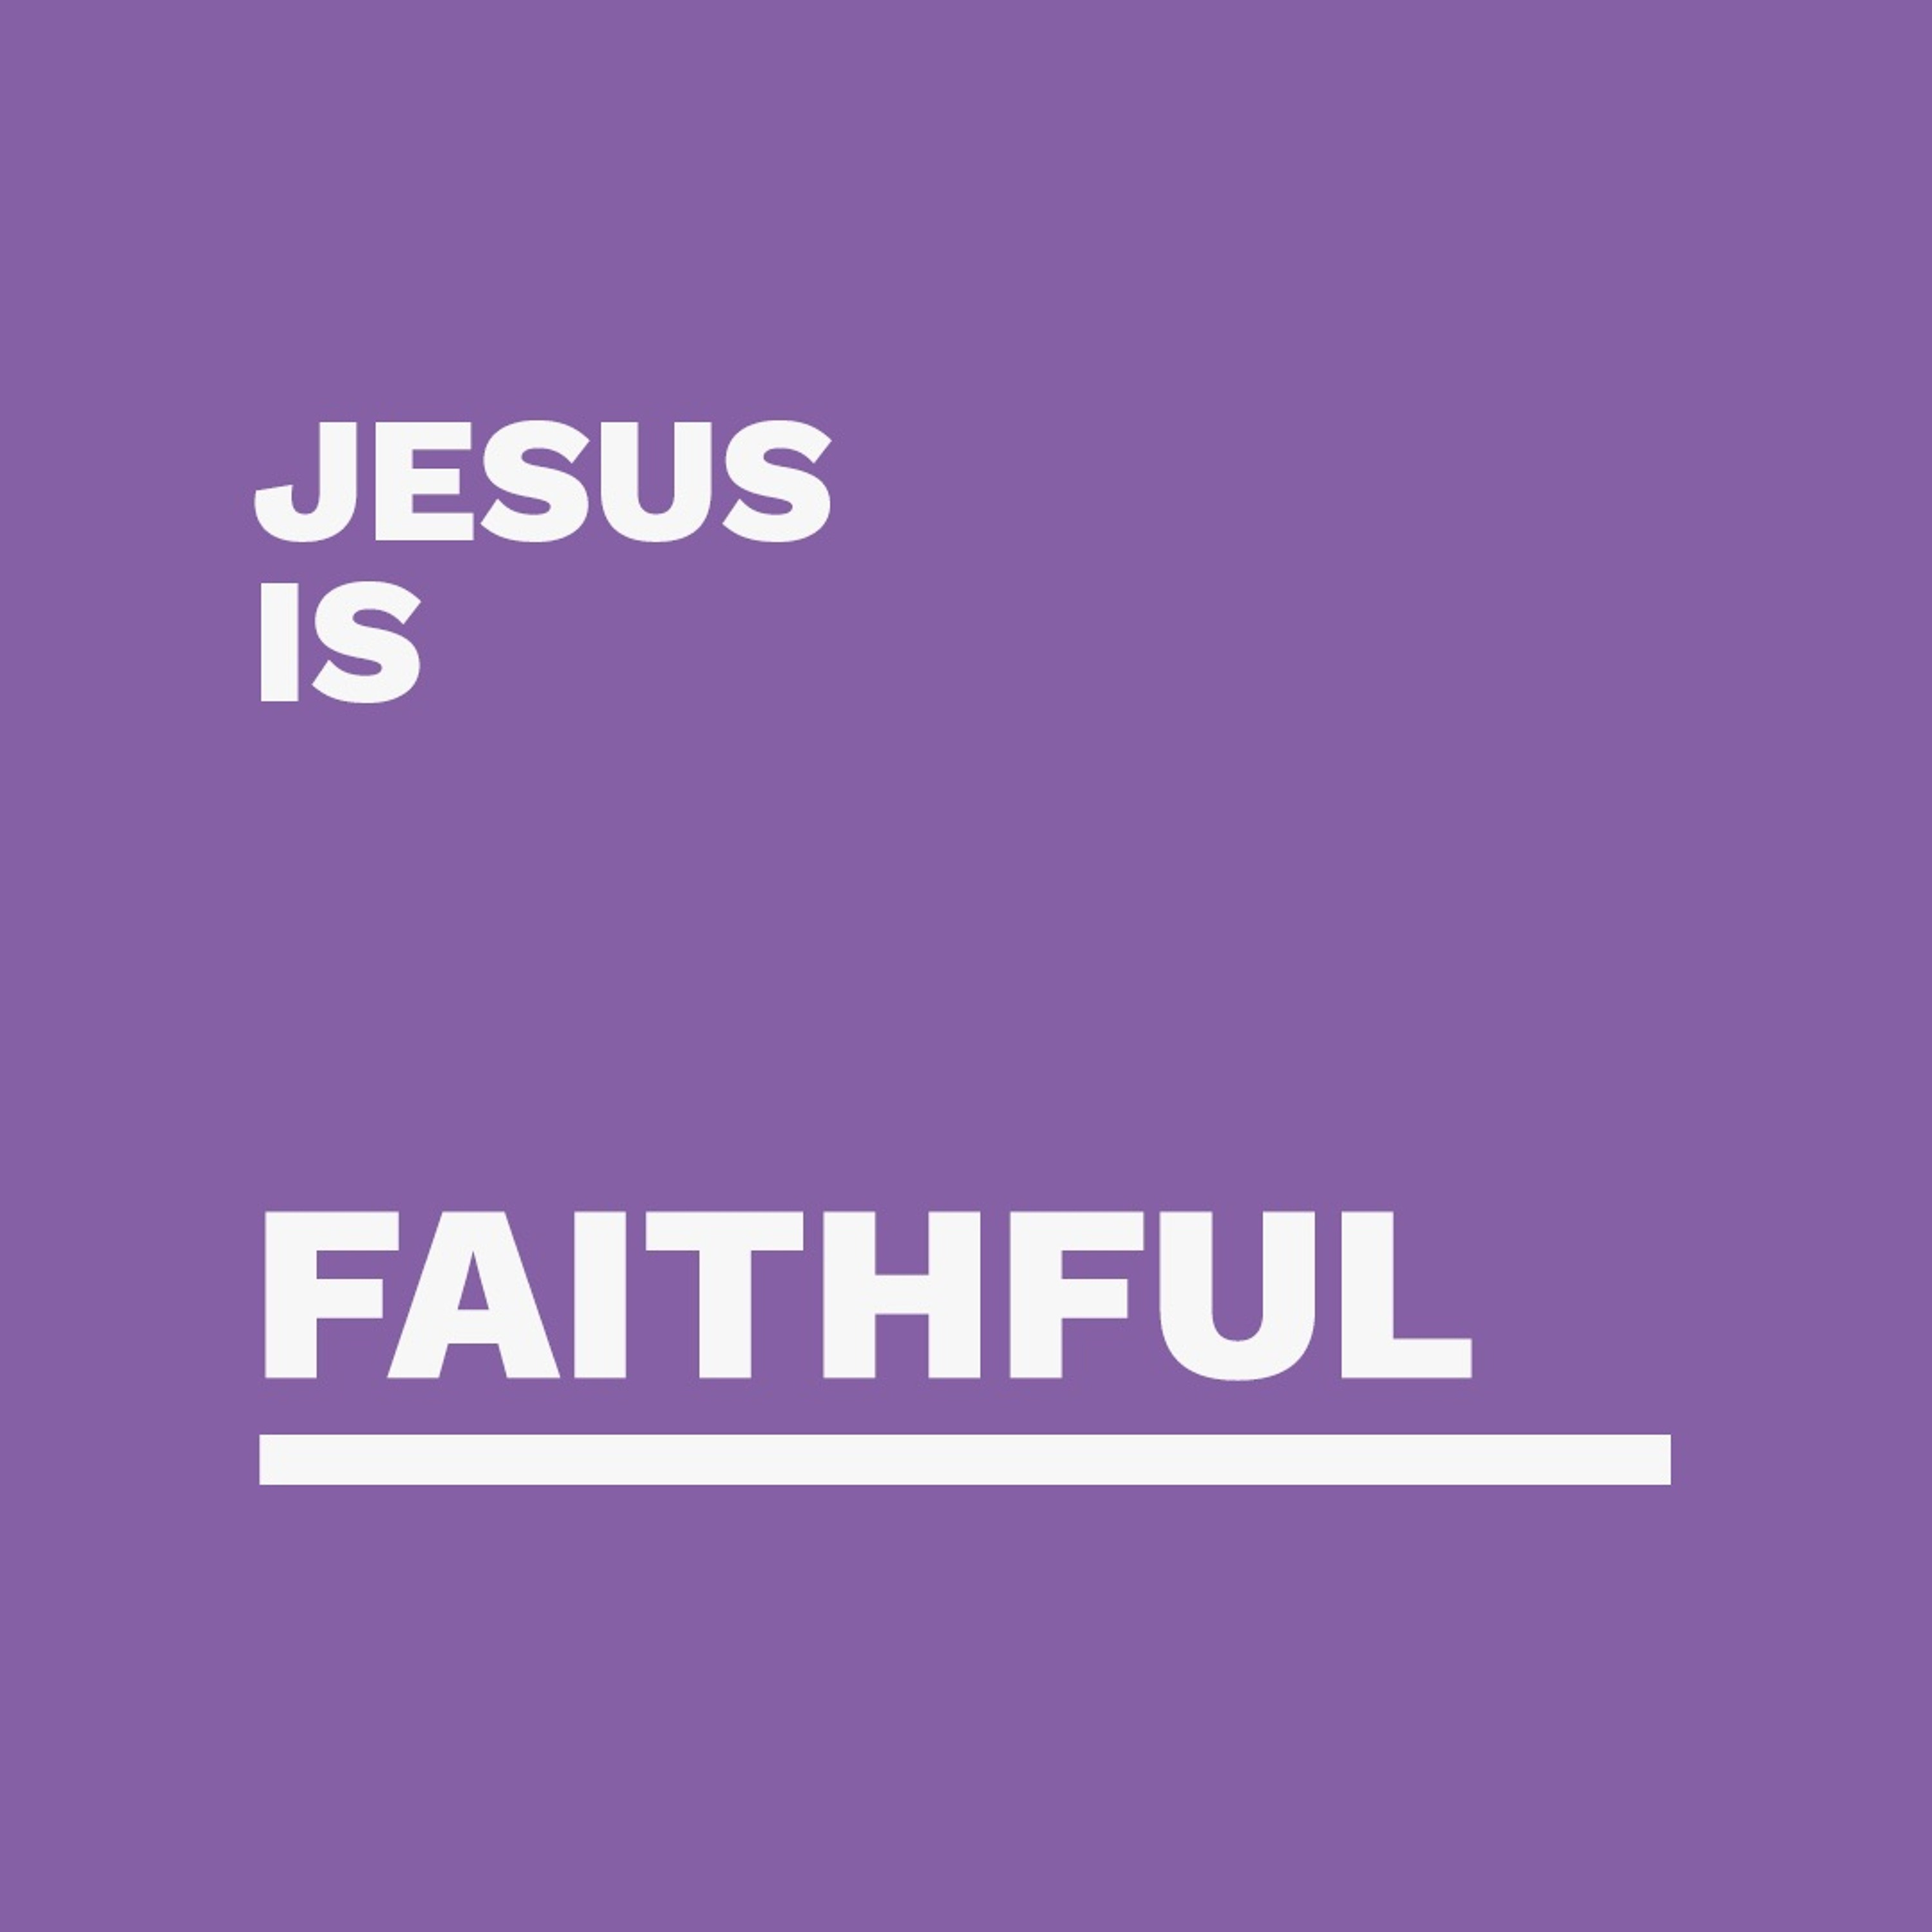 'Jesus is Faithful' / David McBride